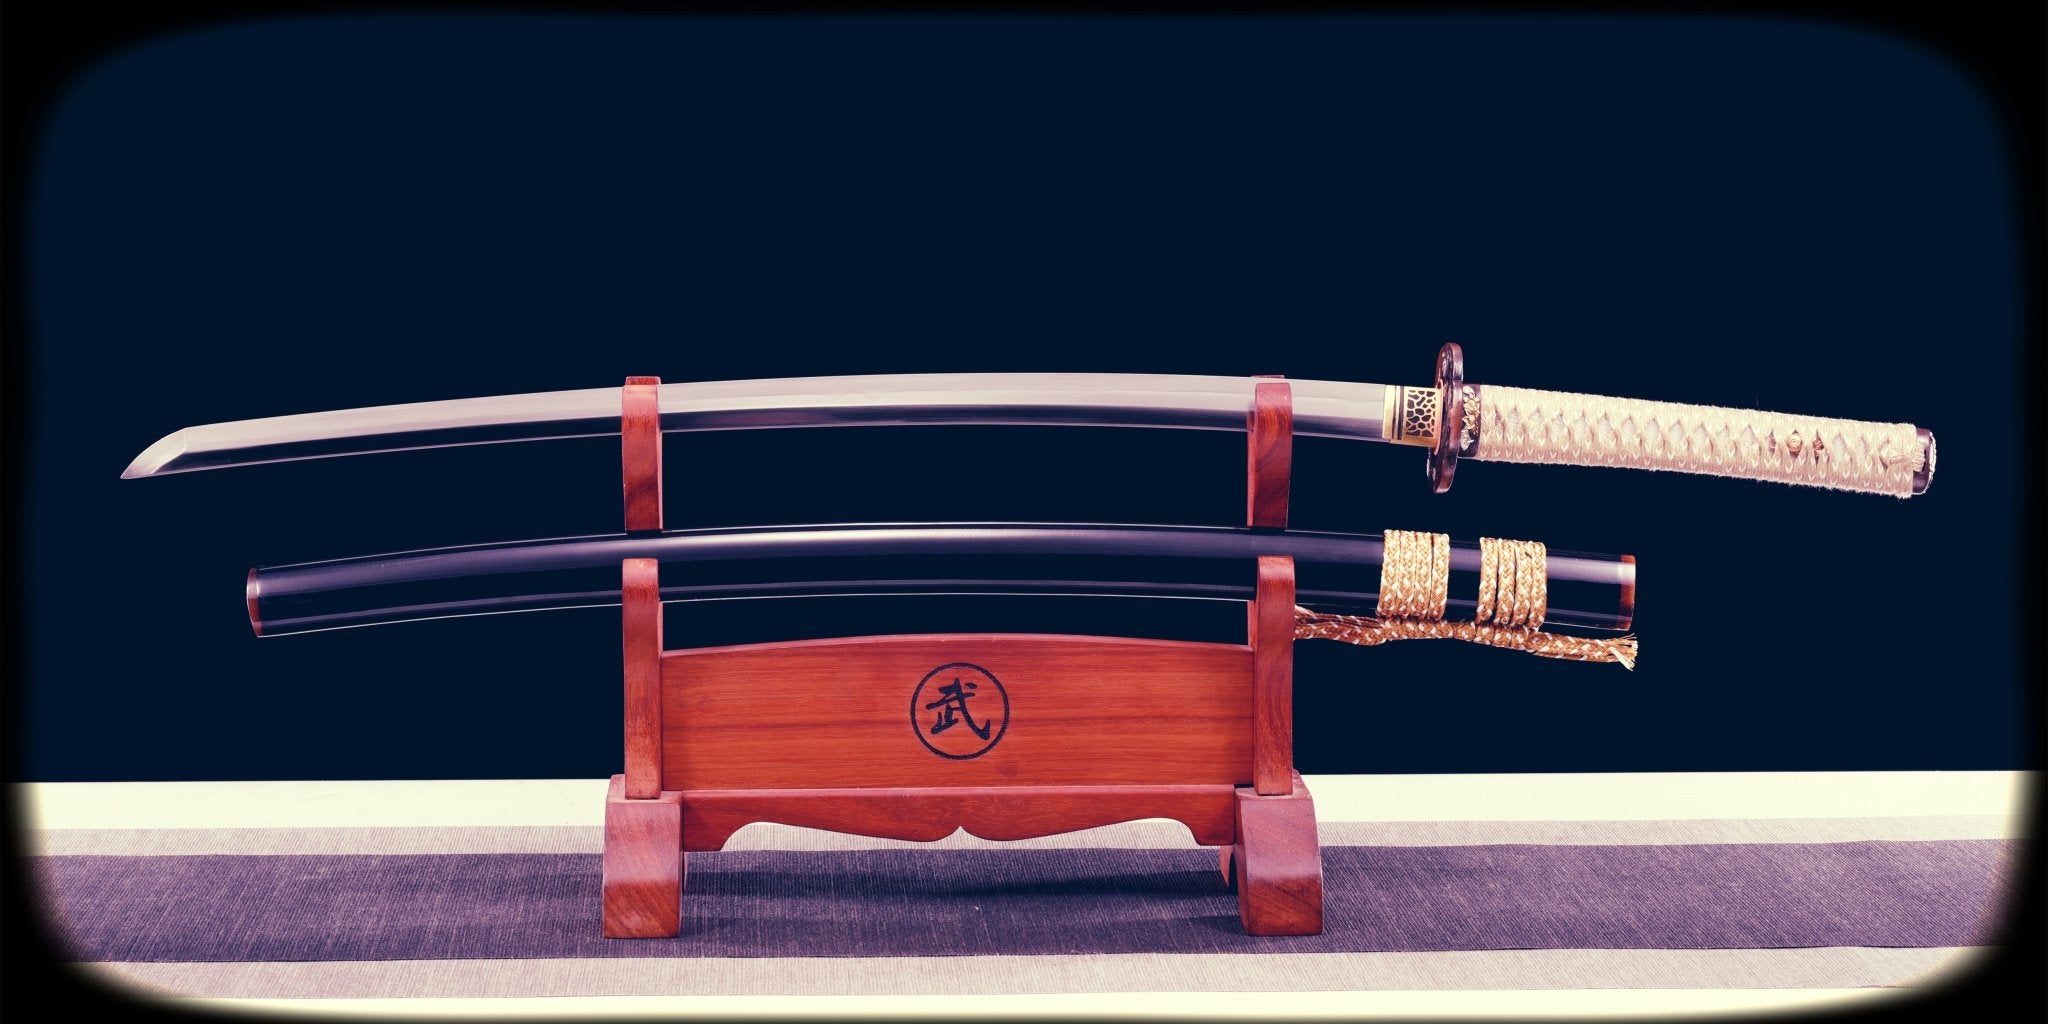 muramasa sword legend